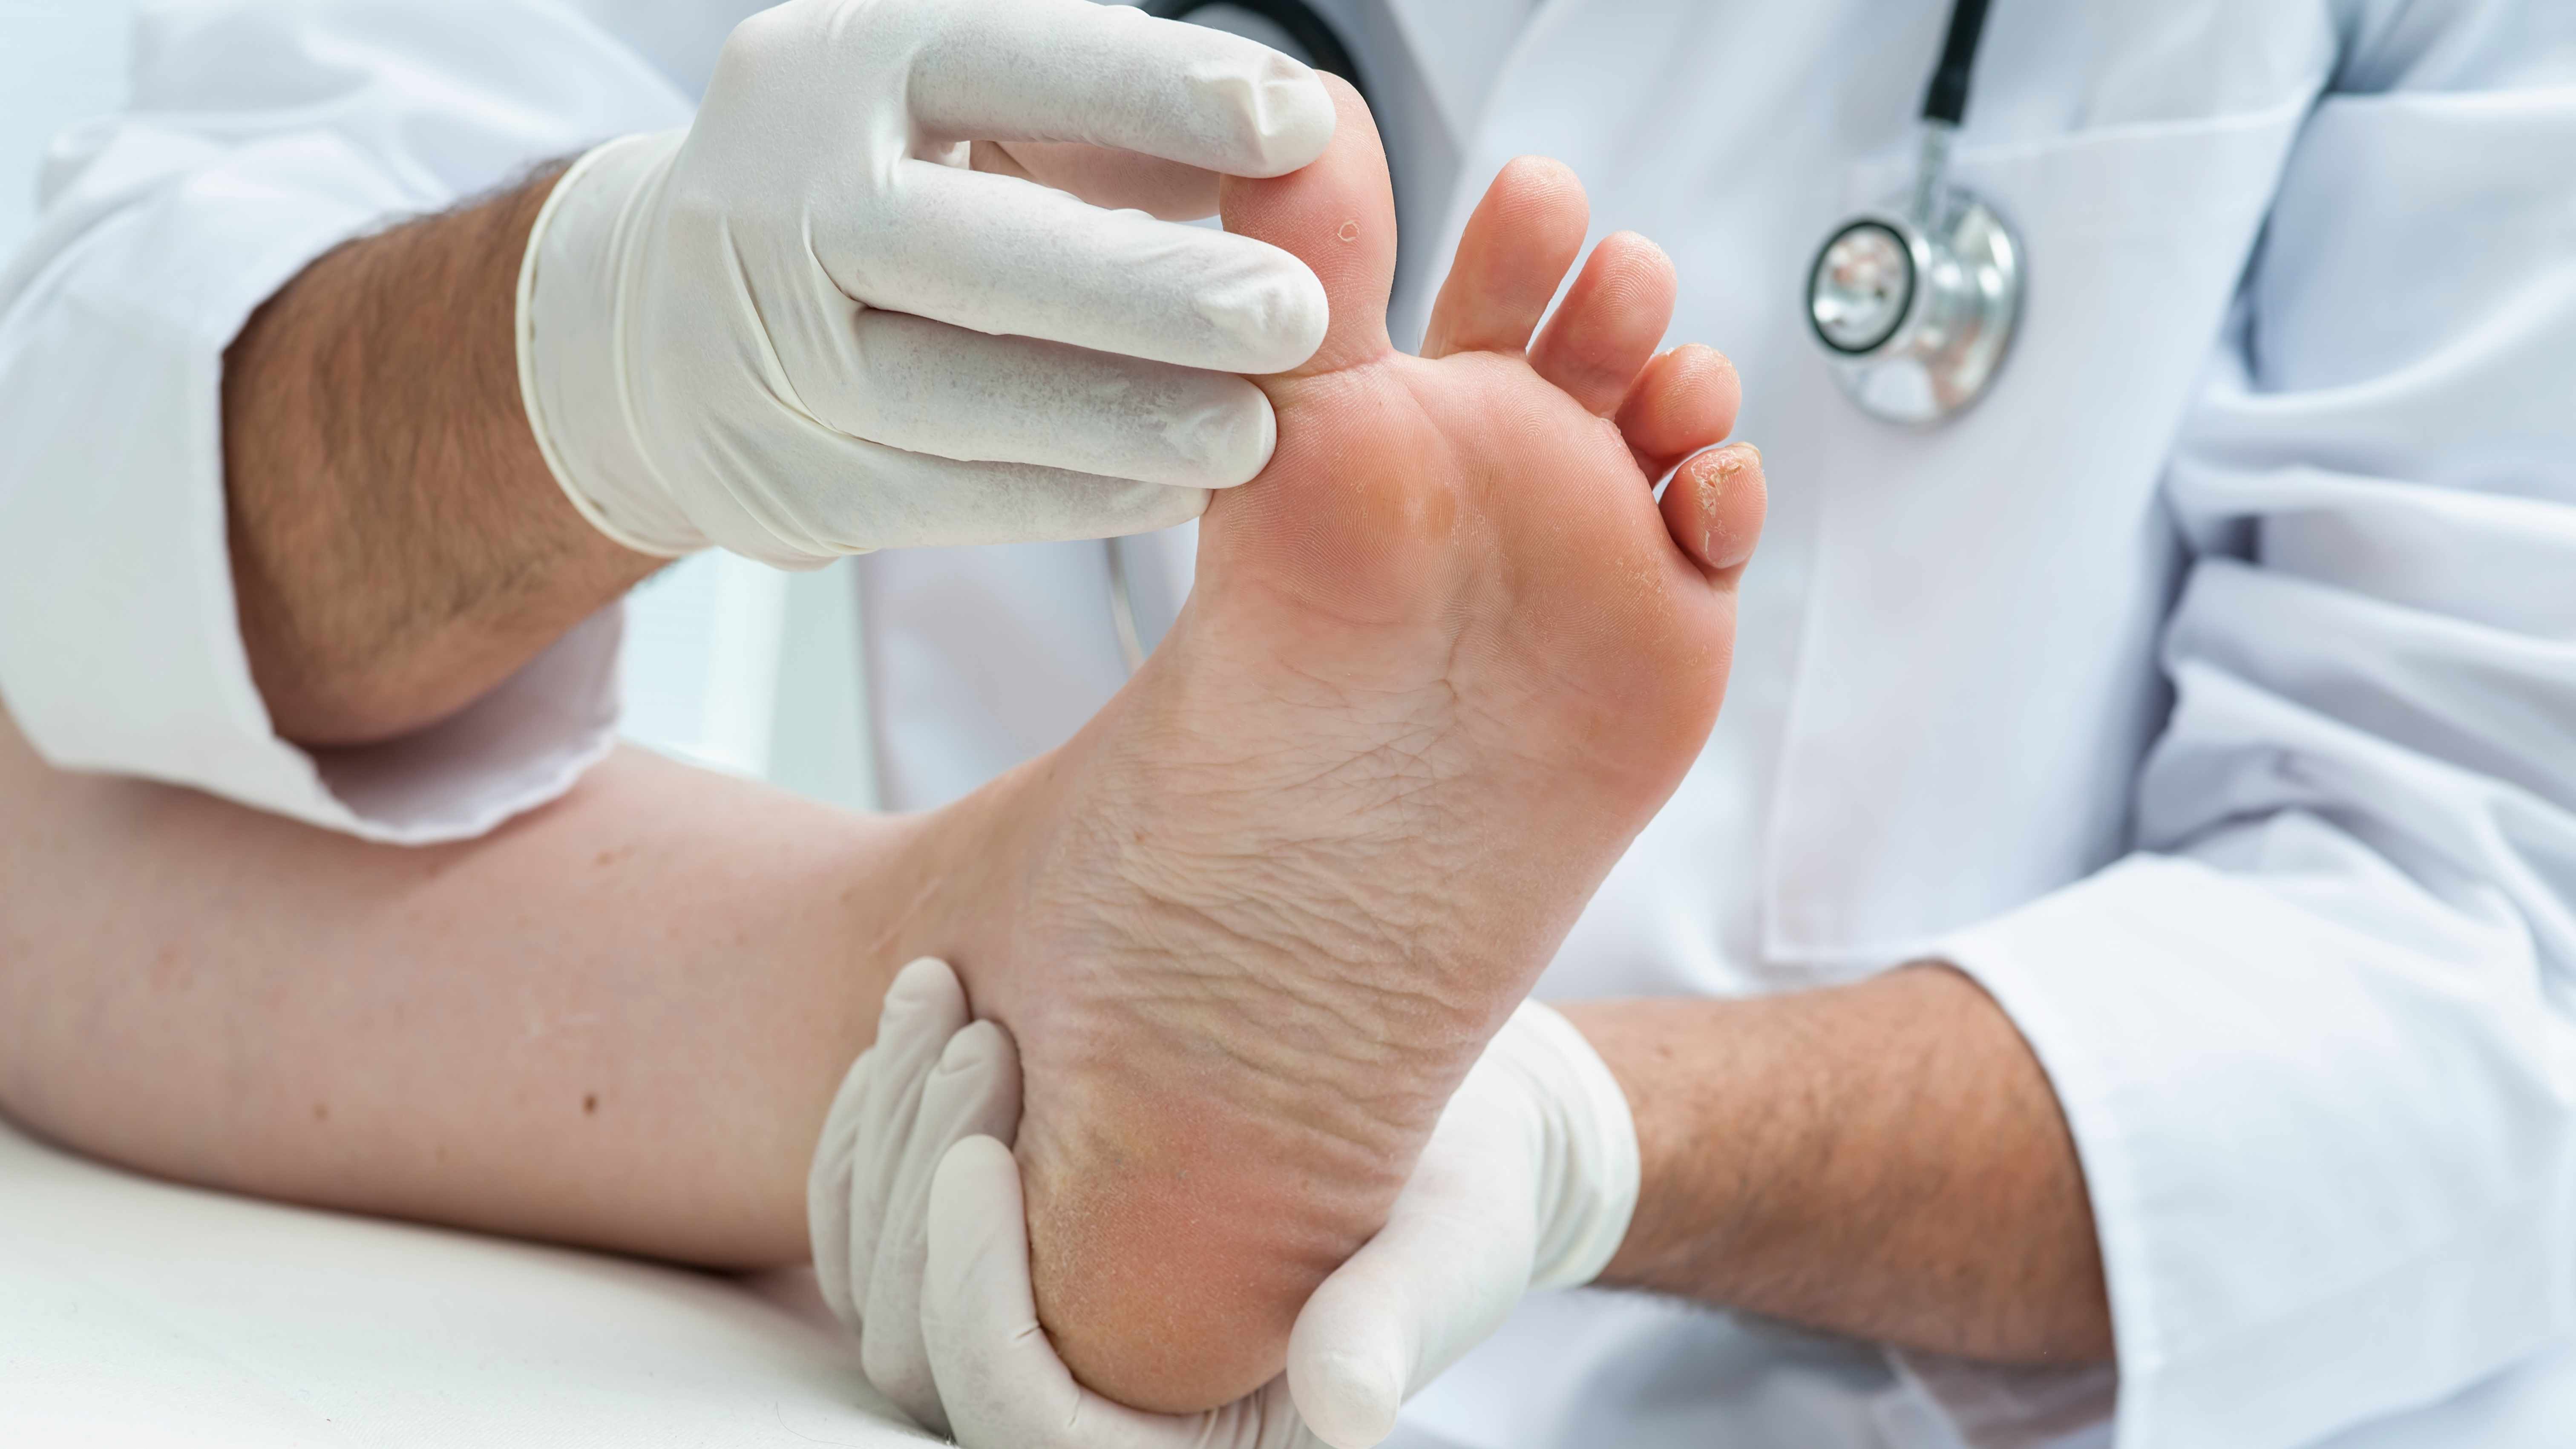 tandlæge efter skole Bebrejde Home Remedies: Fighting foot fungus - Mayo Clinic News Network